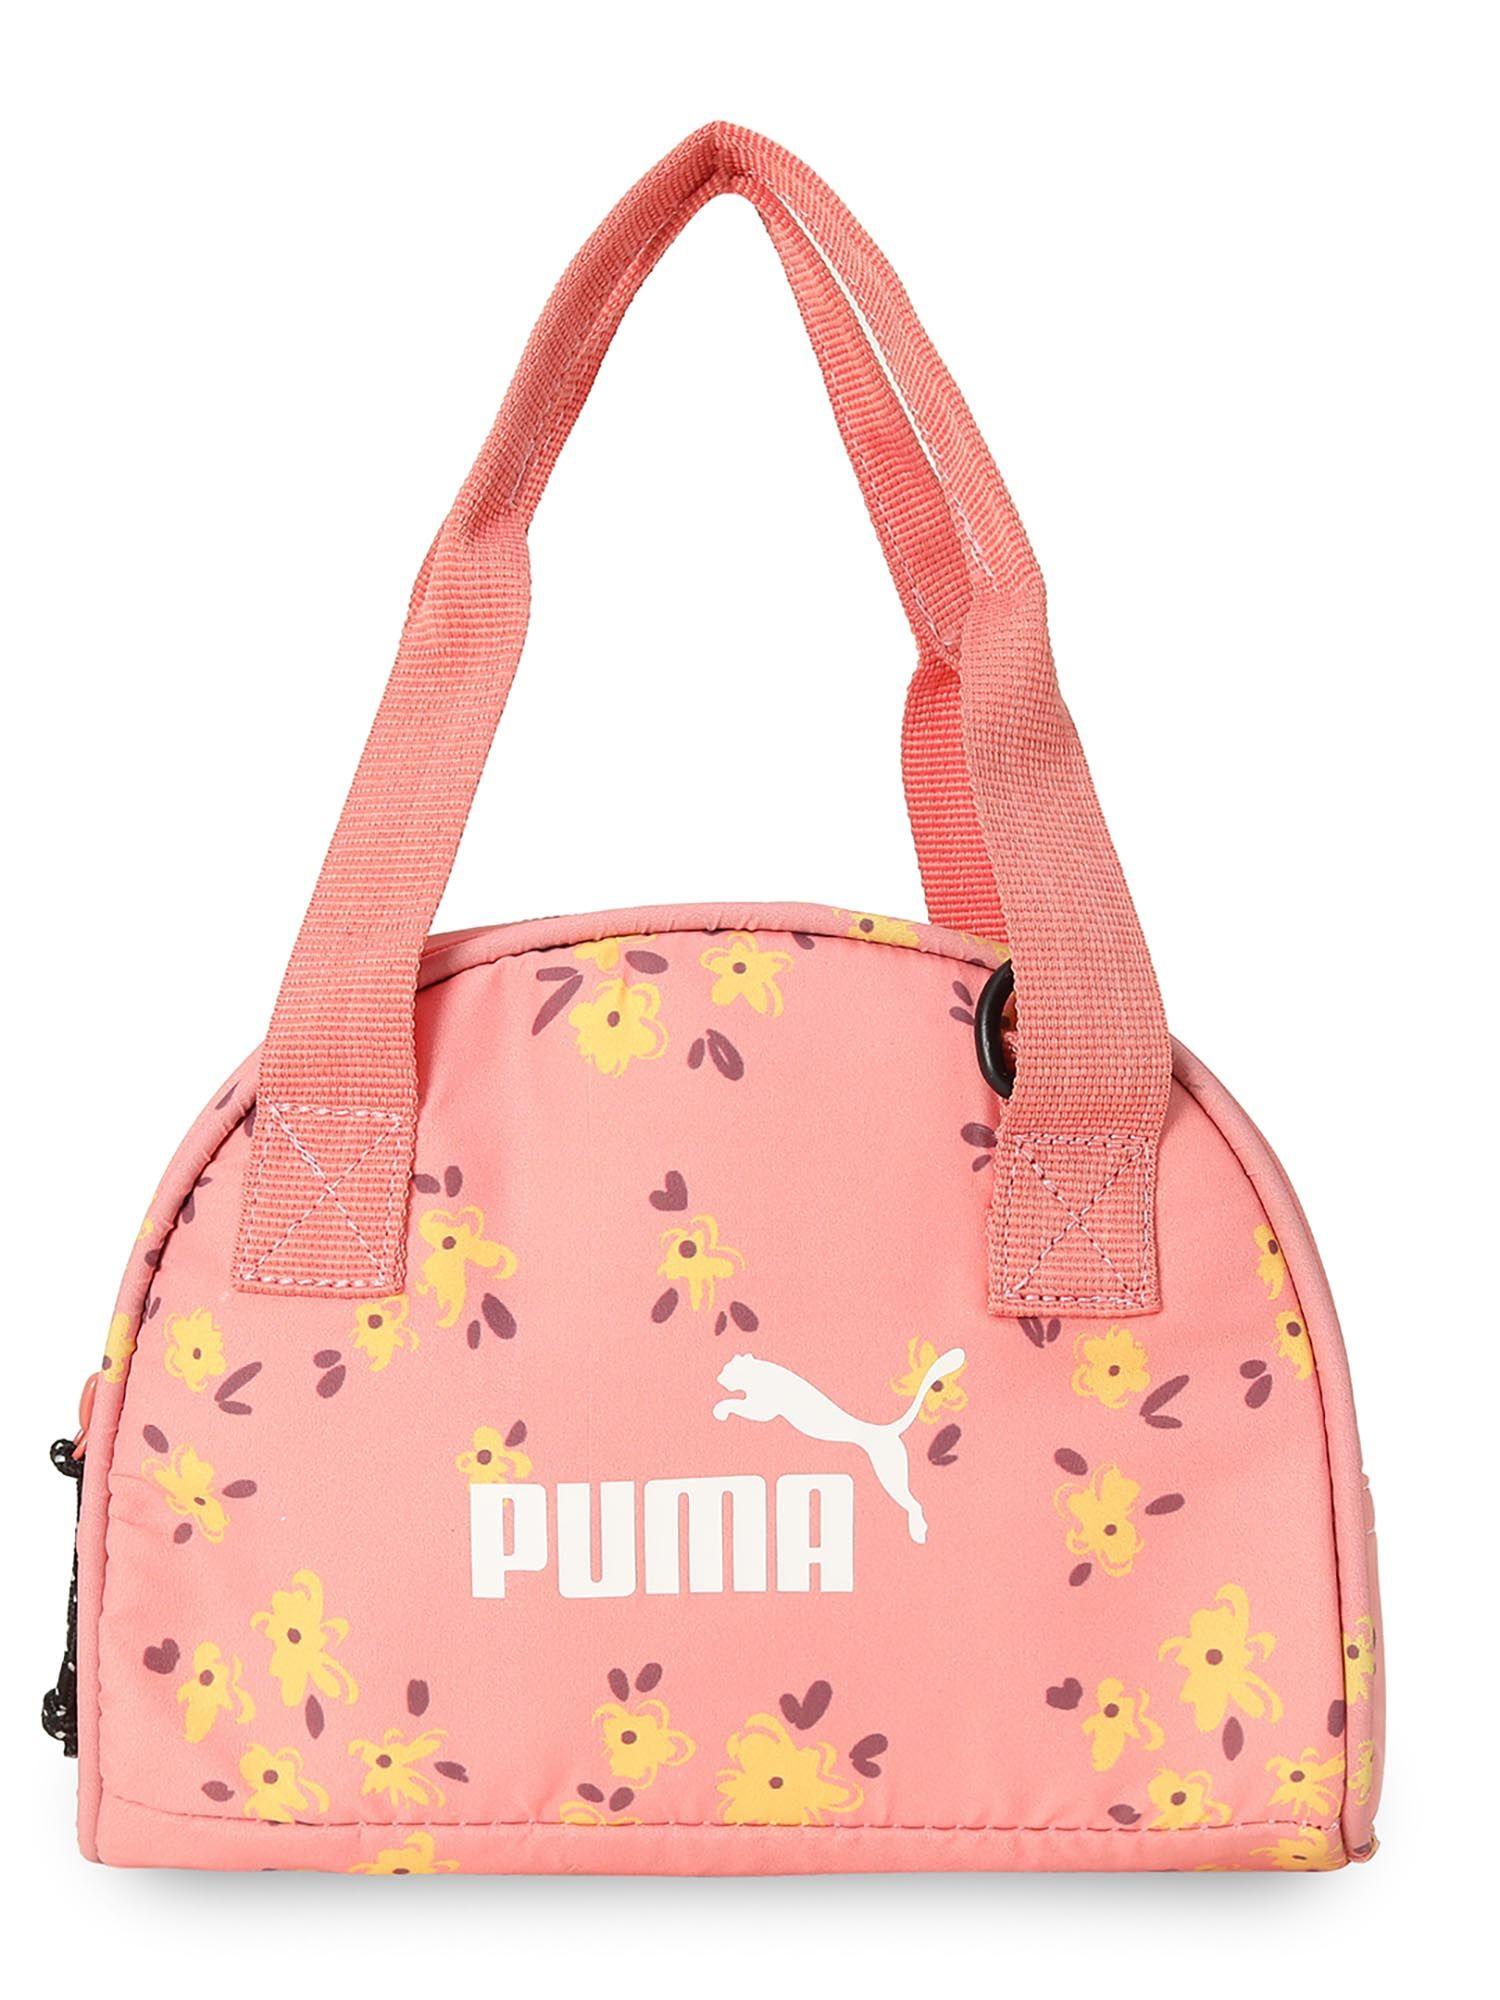 women's floral graphic pink handbag